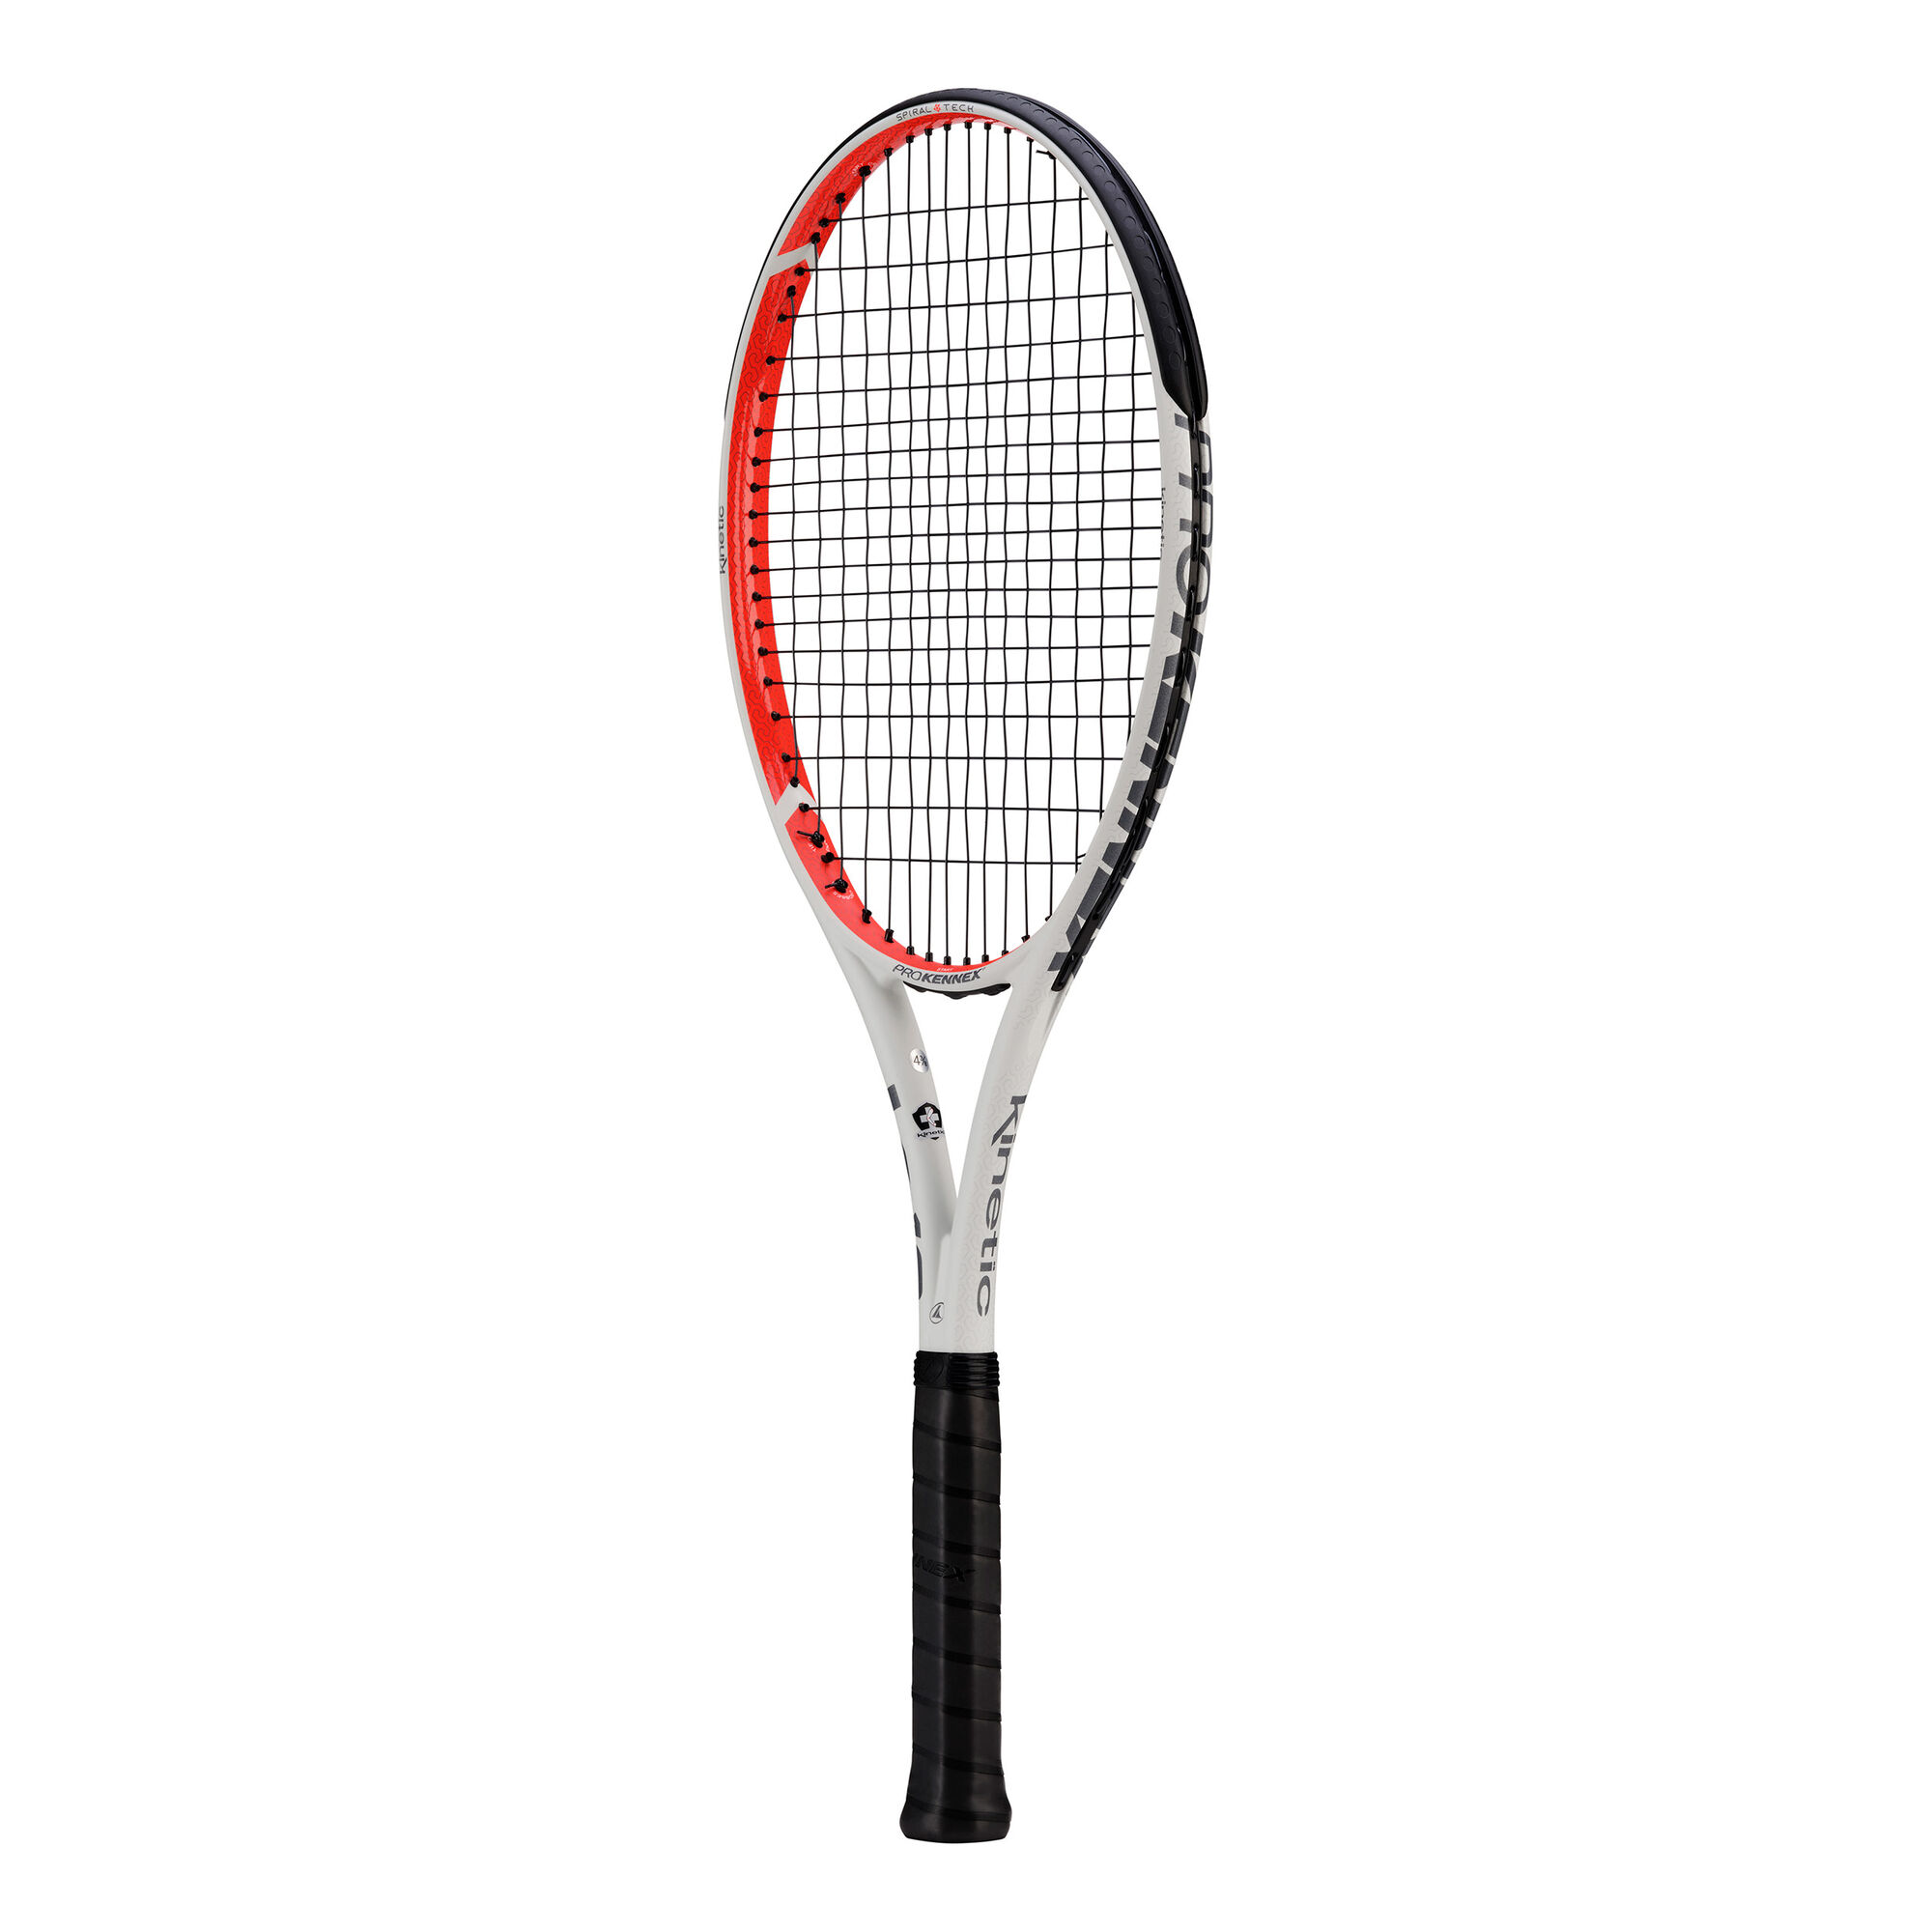 Buy PROKENNEX Kinetic 10 (305g) | Point COM Tennis online